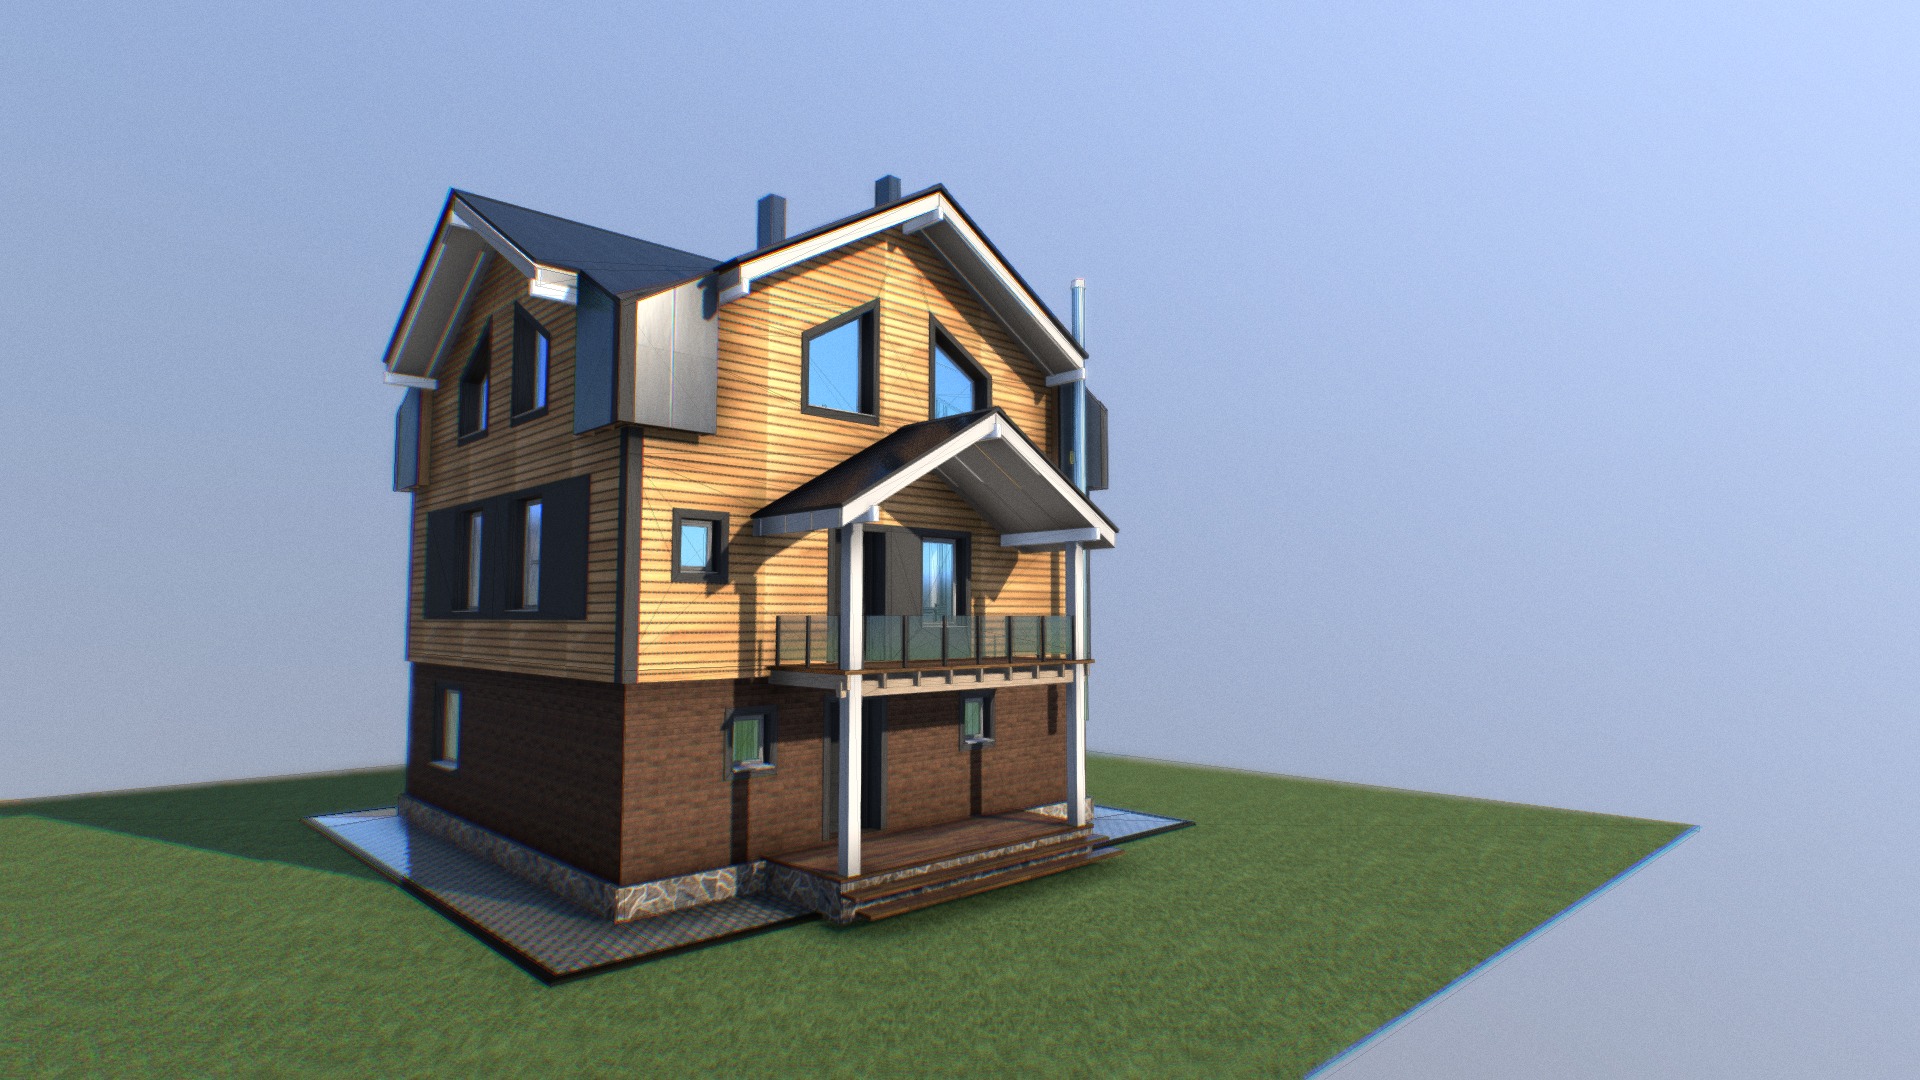 3D model Sverdlova – reconstruction of existing house - This is a 3D model of the Sverdlova - reconstruction of existing house. The 3D model is about a model of a house.